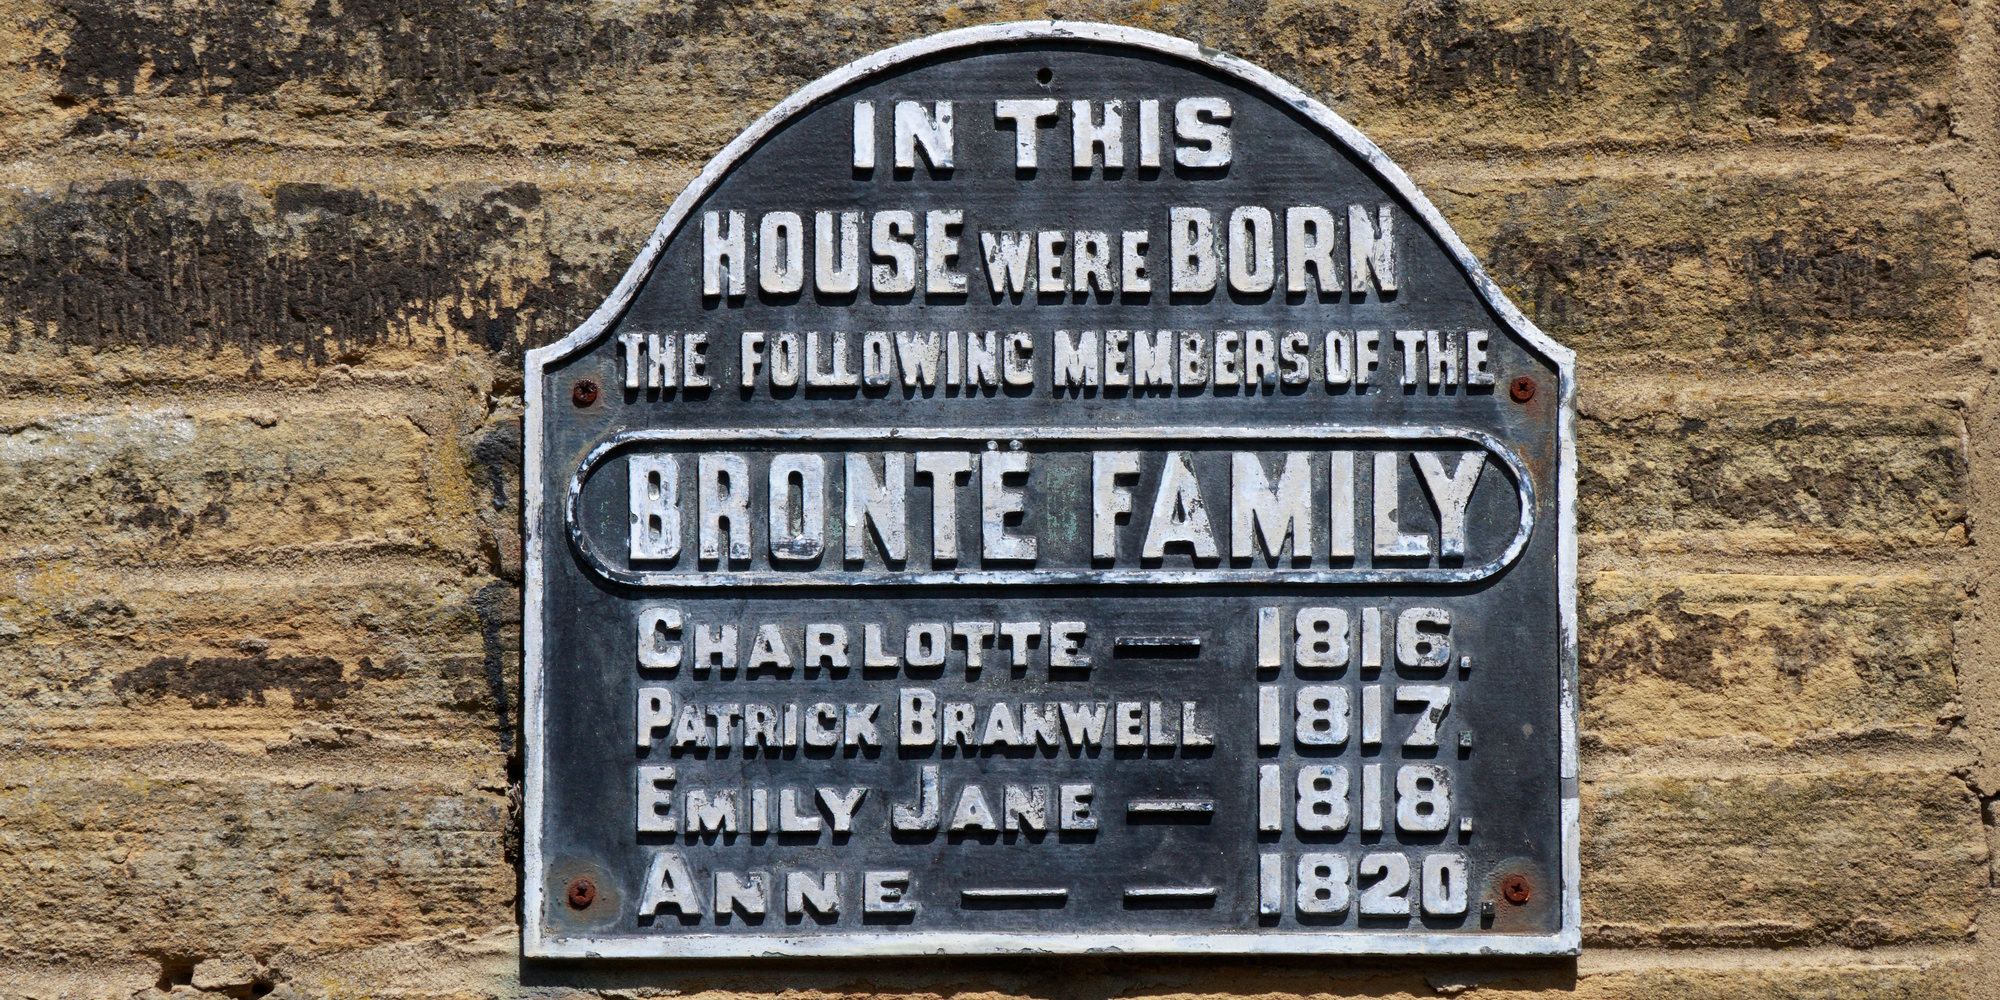 Bronte family birthplace plaque, Thornton, Bradford, West Yorkshire, England, UK.